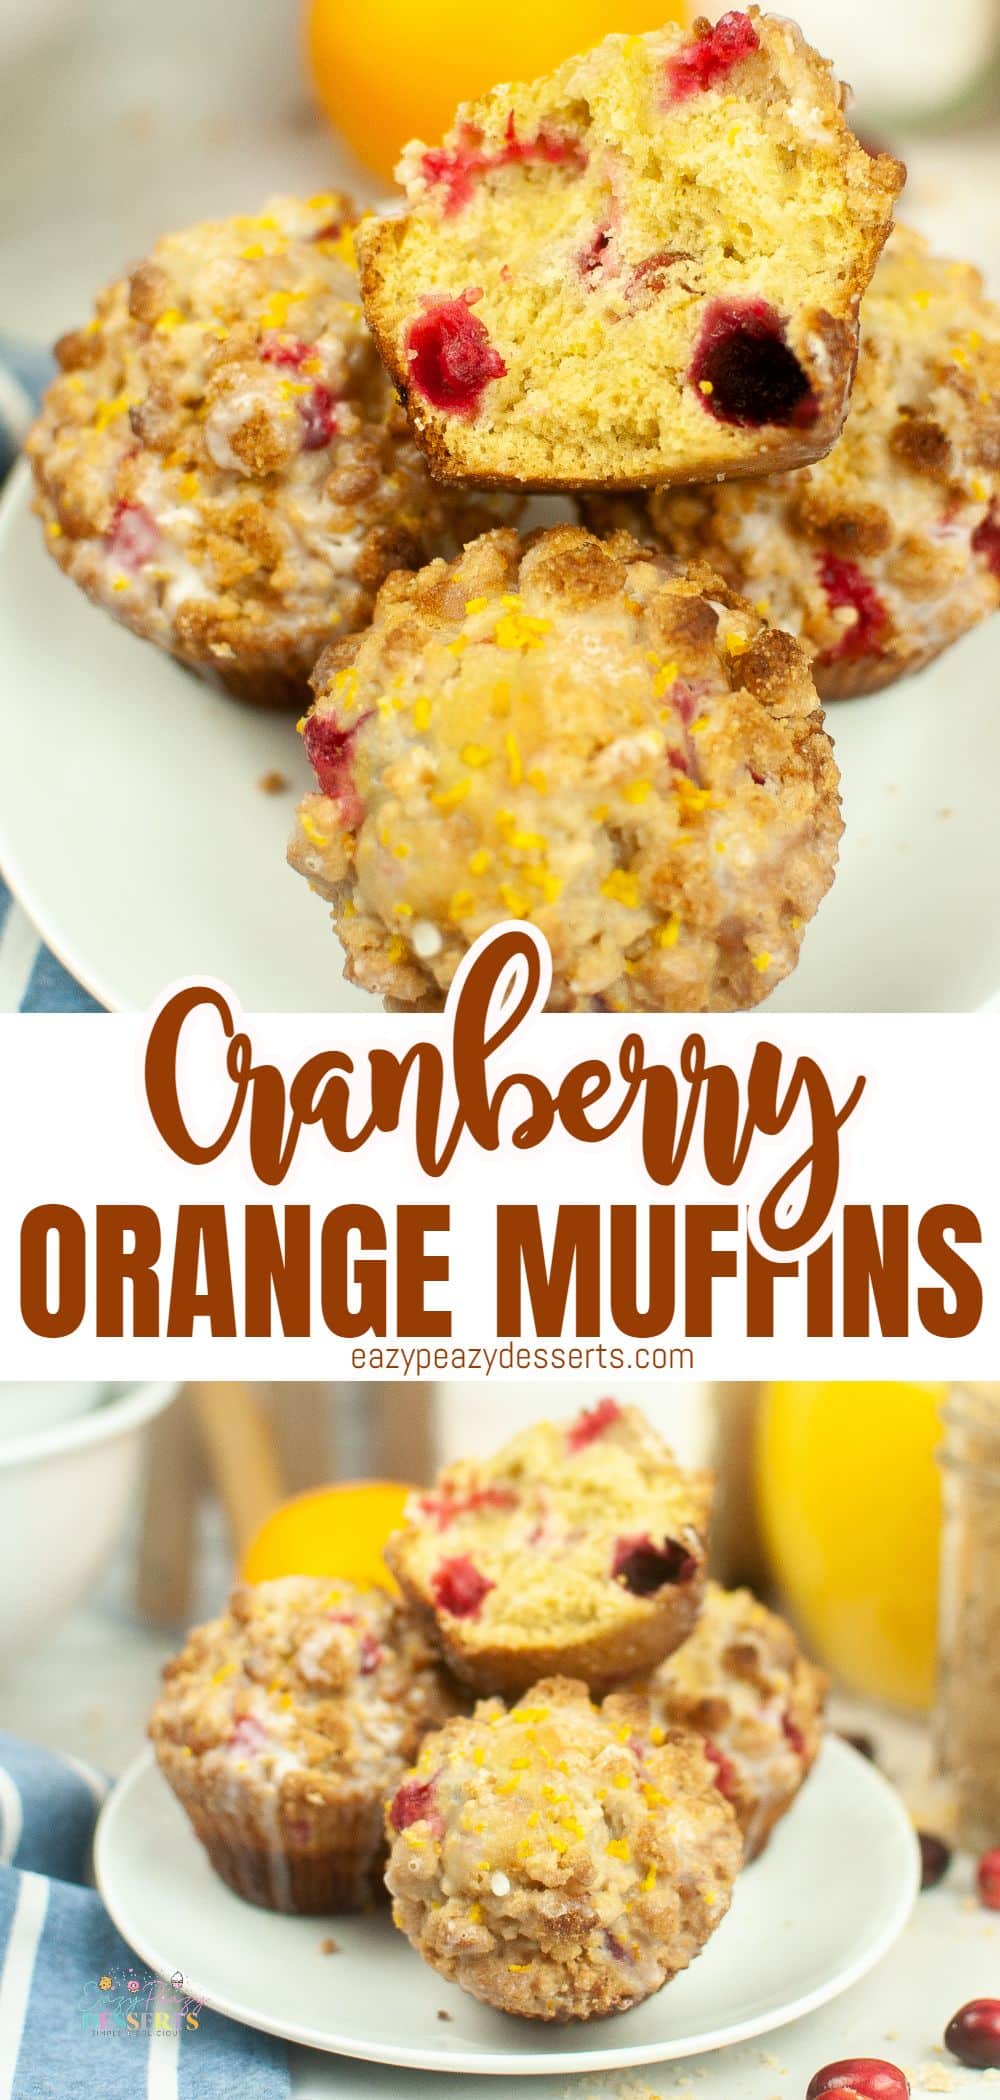 Cranberry orange muffins